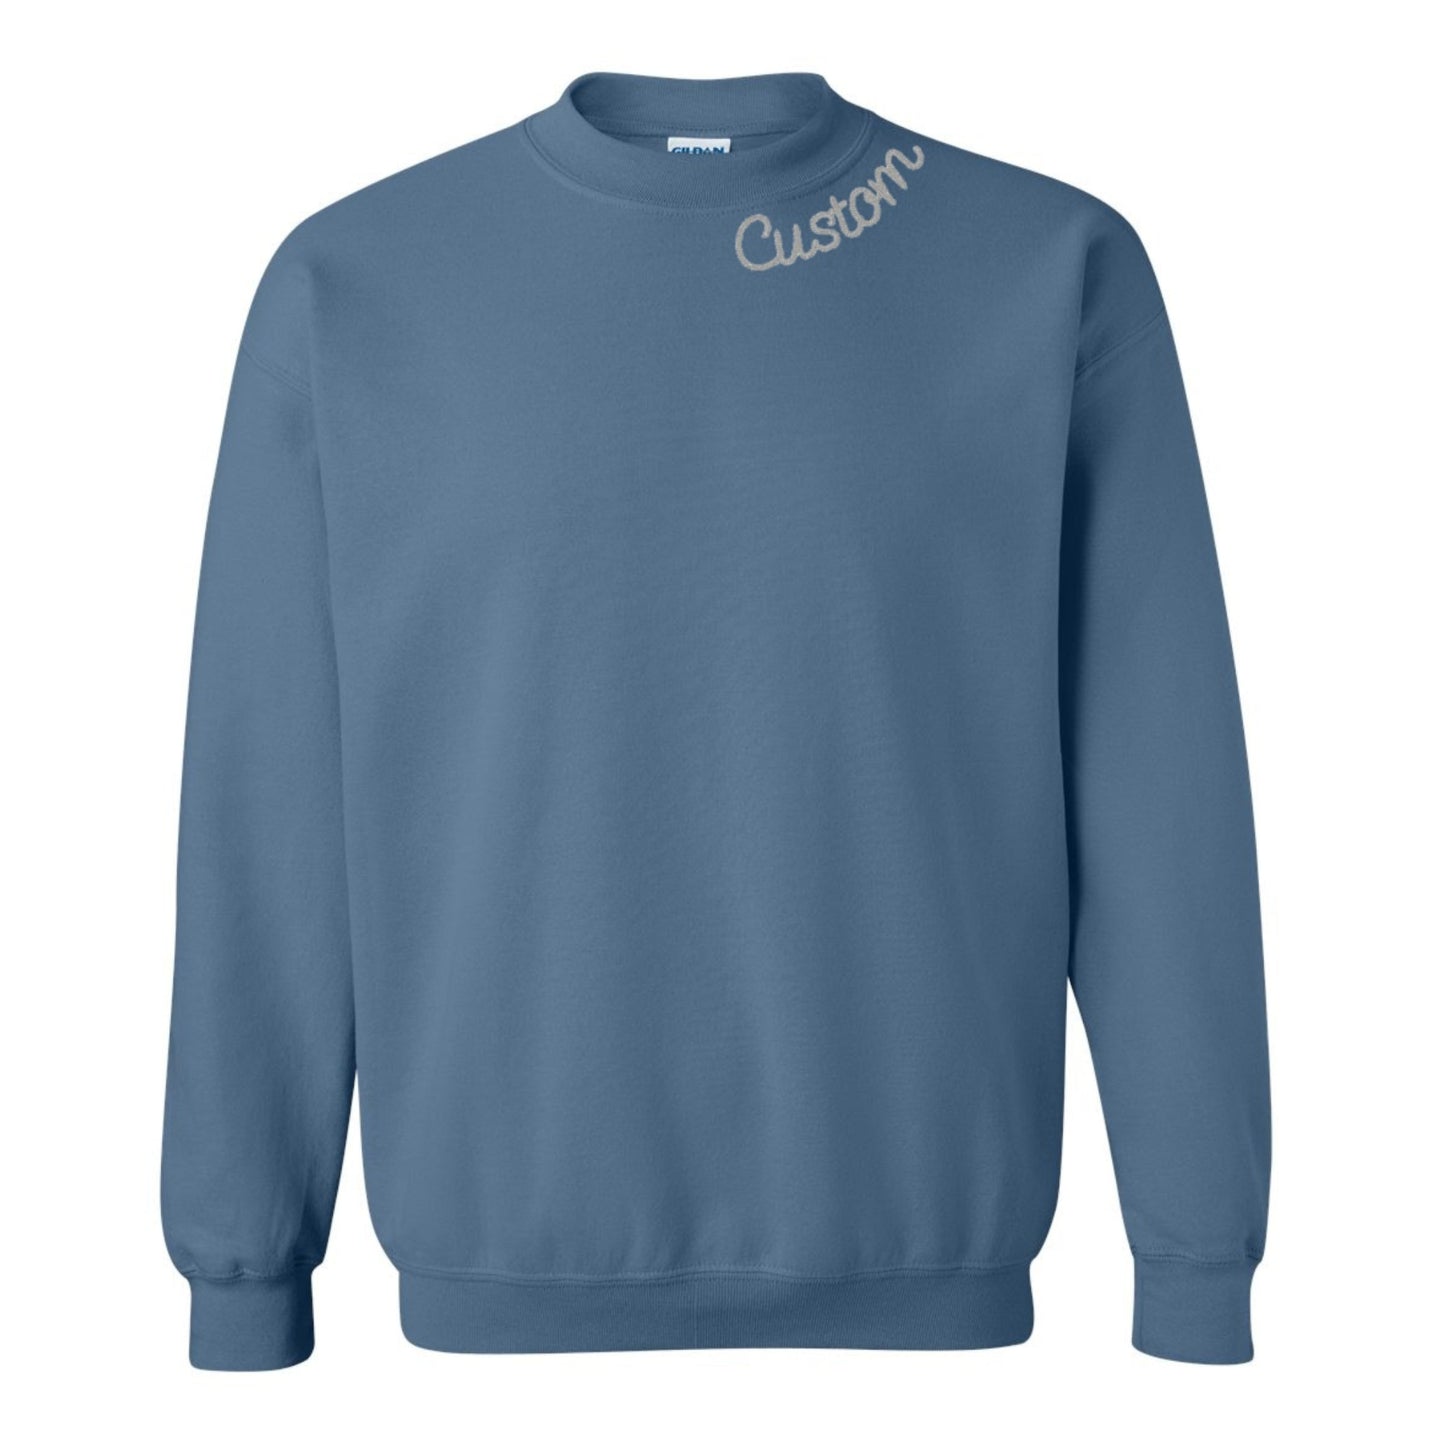 Indigo Blue Custom Embroidered Crewneck Sweatshirt - Personalized Chain Stitch